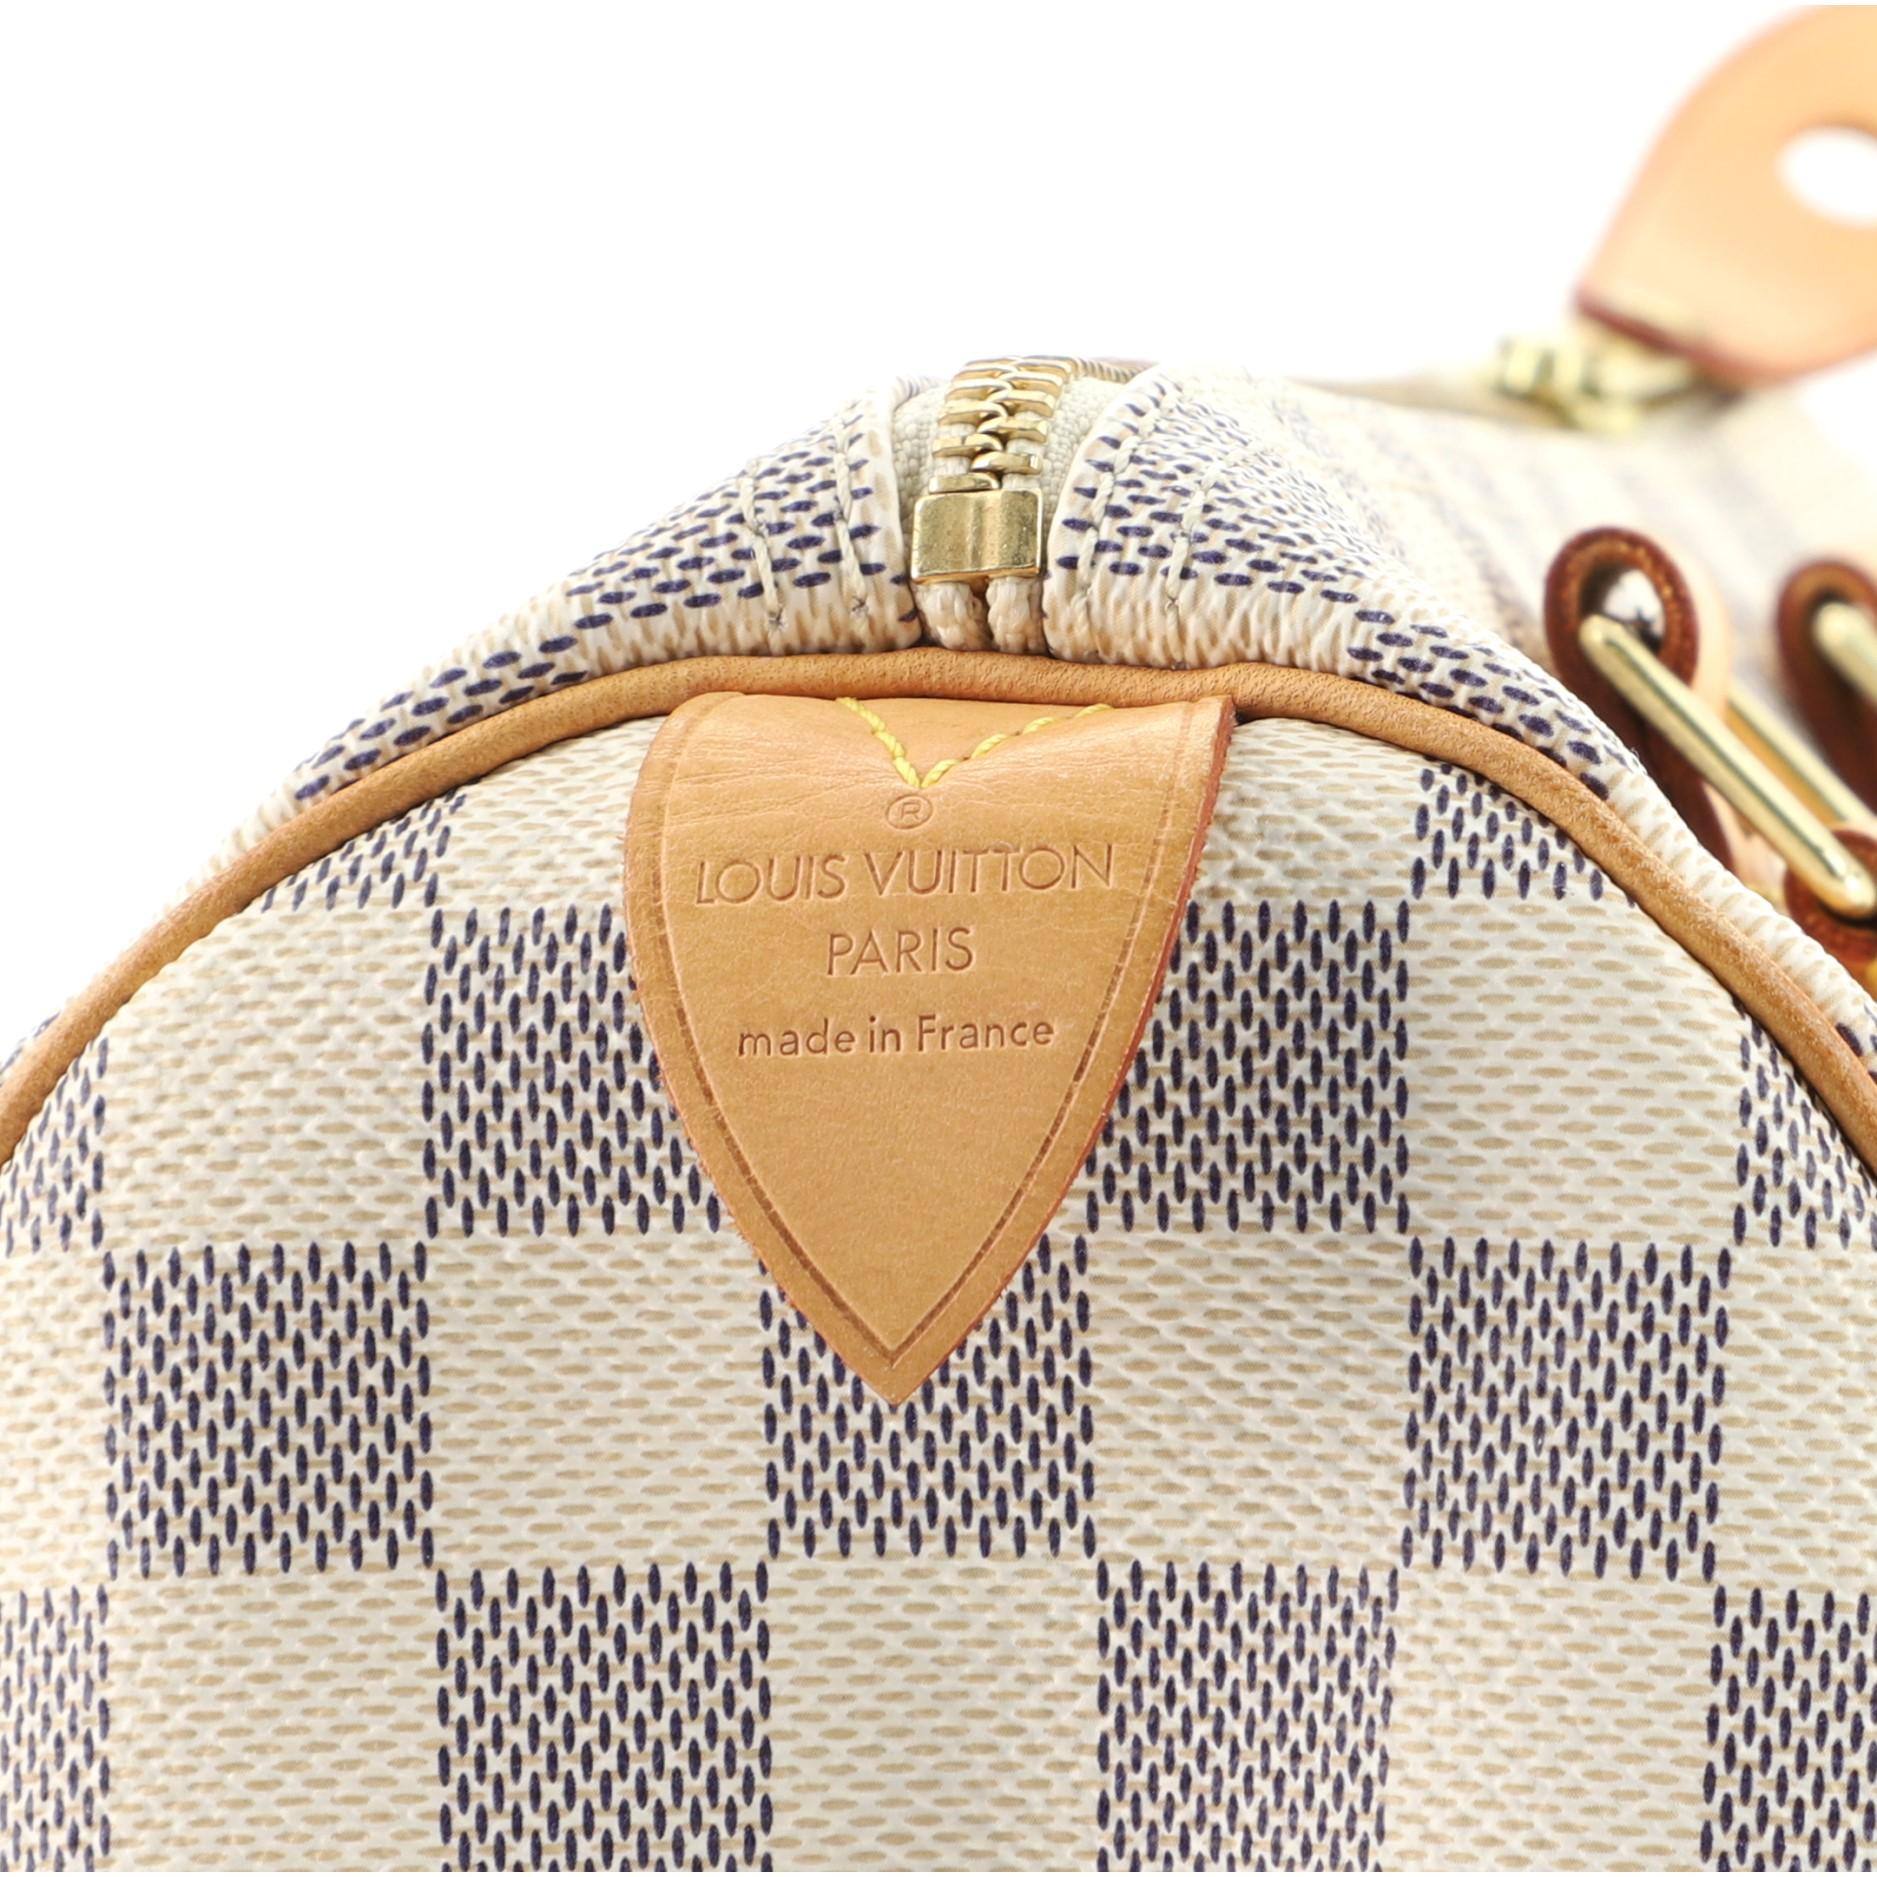 Women's or Men's Louis Vuitton Speedy Handbag Damier 25